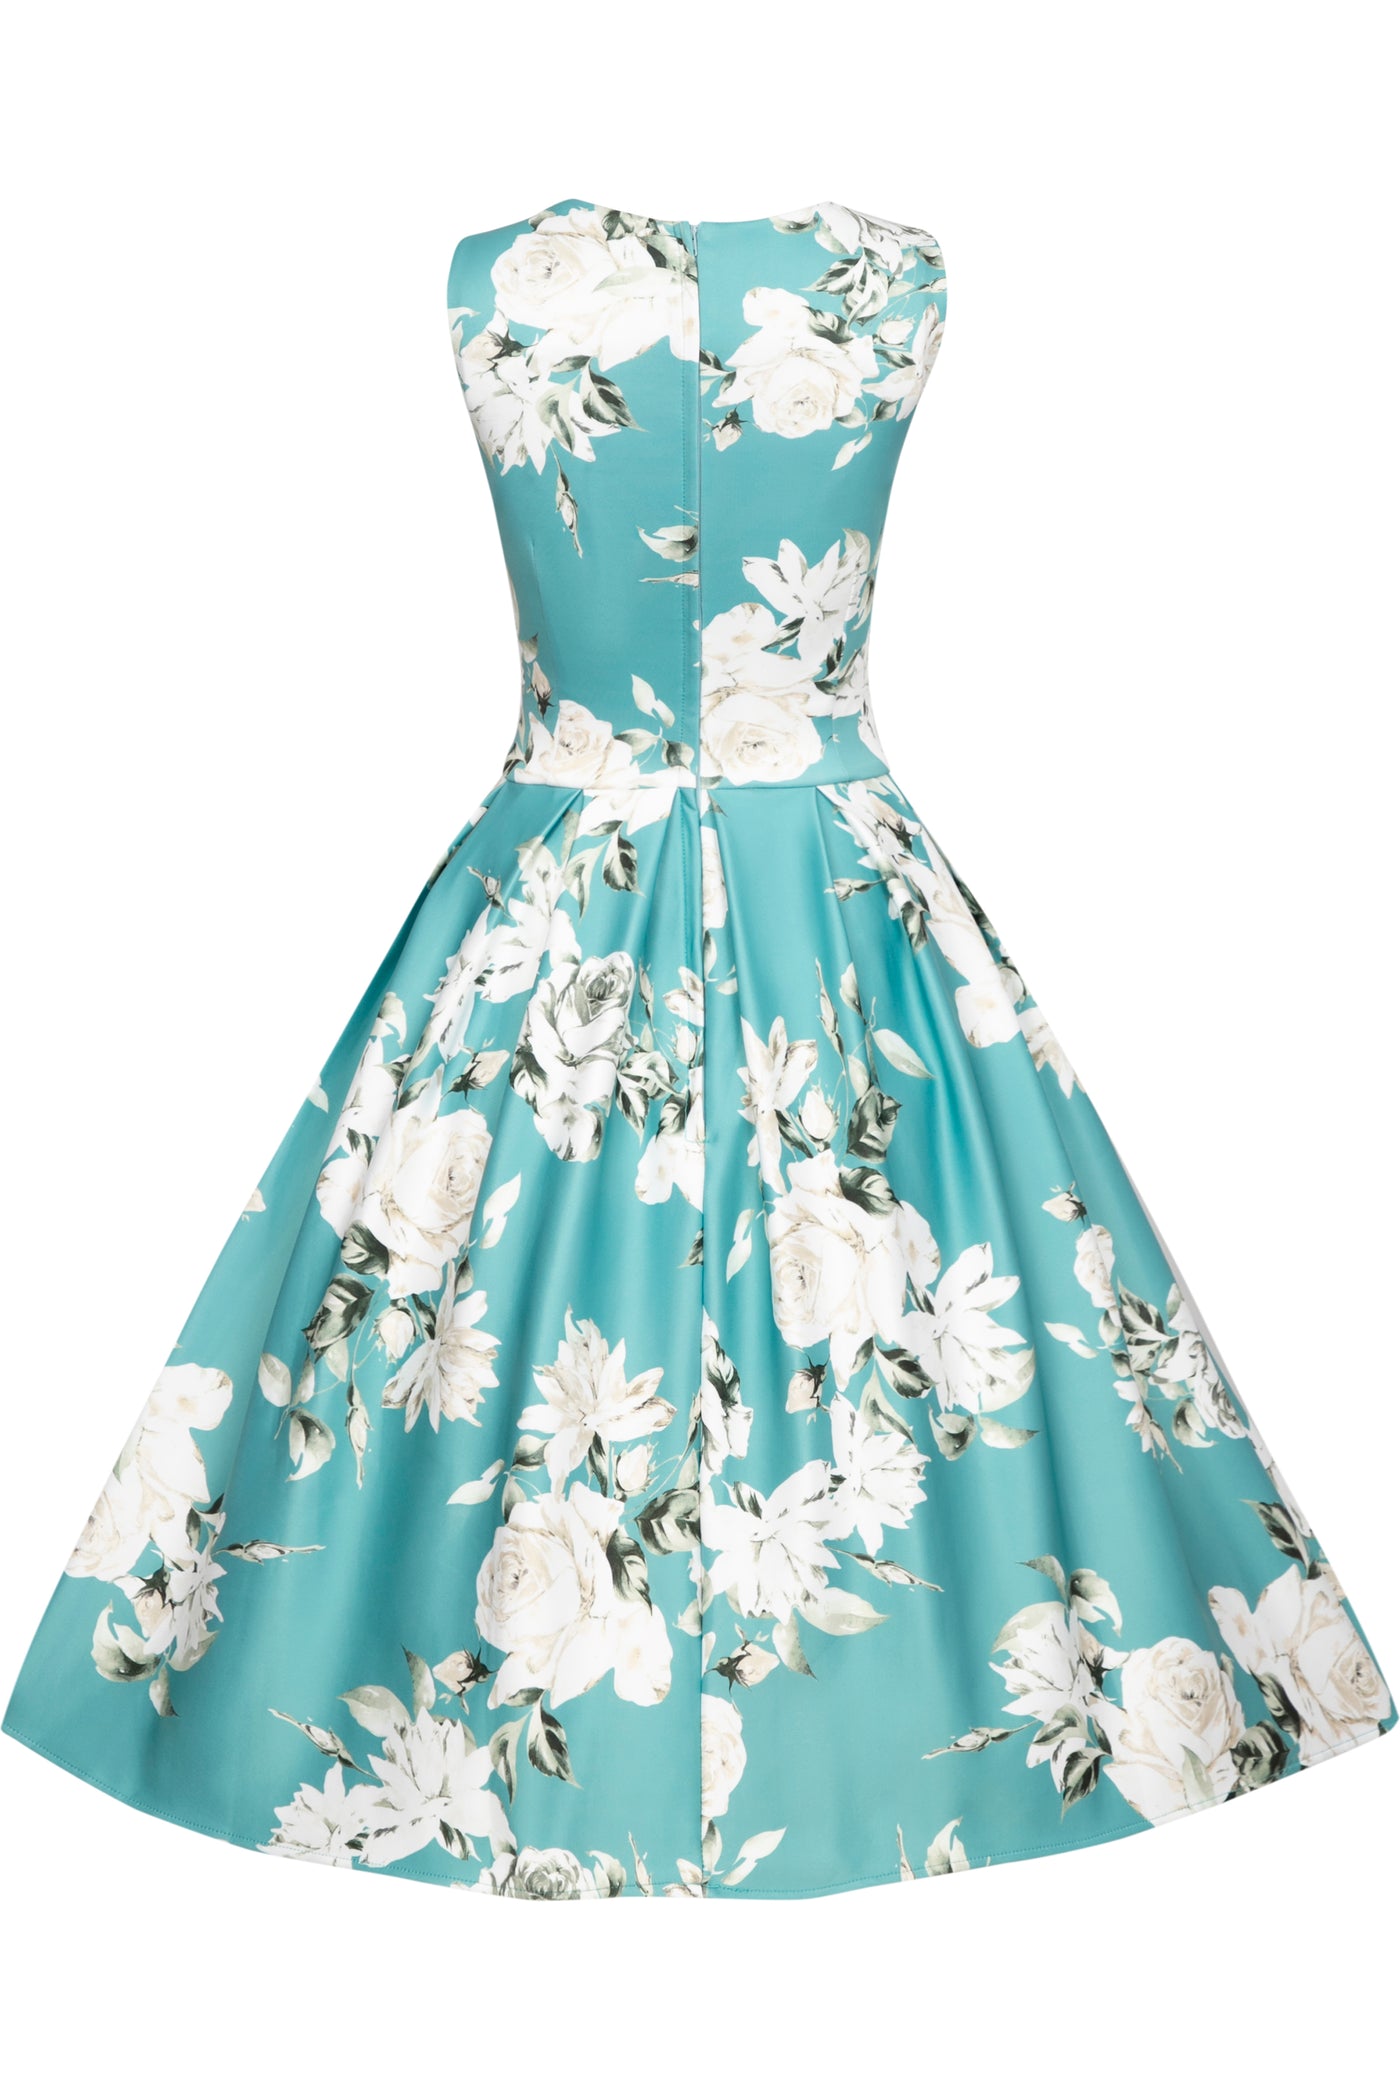 Mint Floral Swing Dress